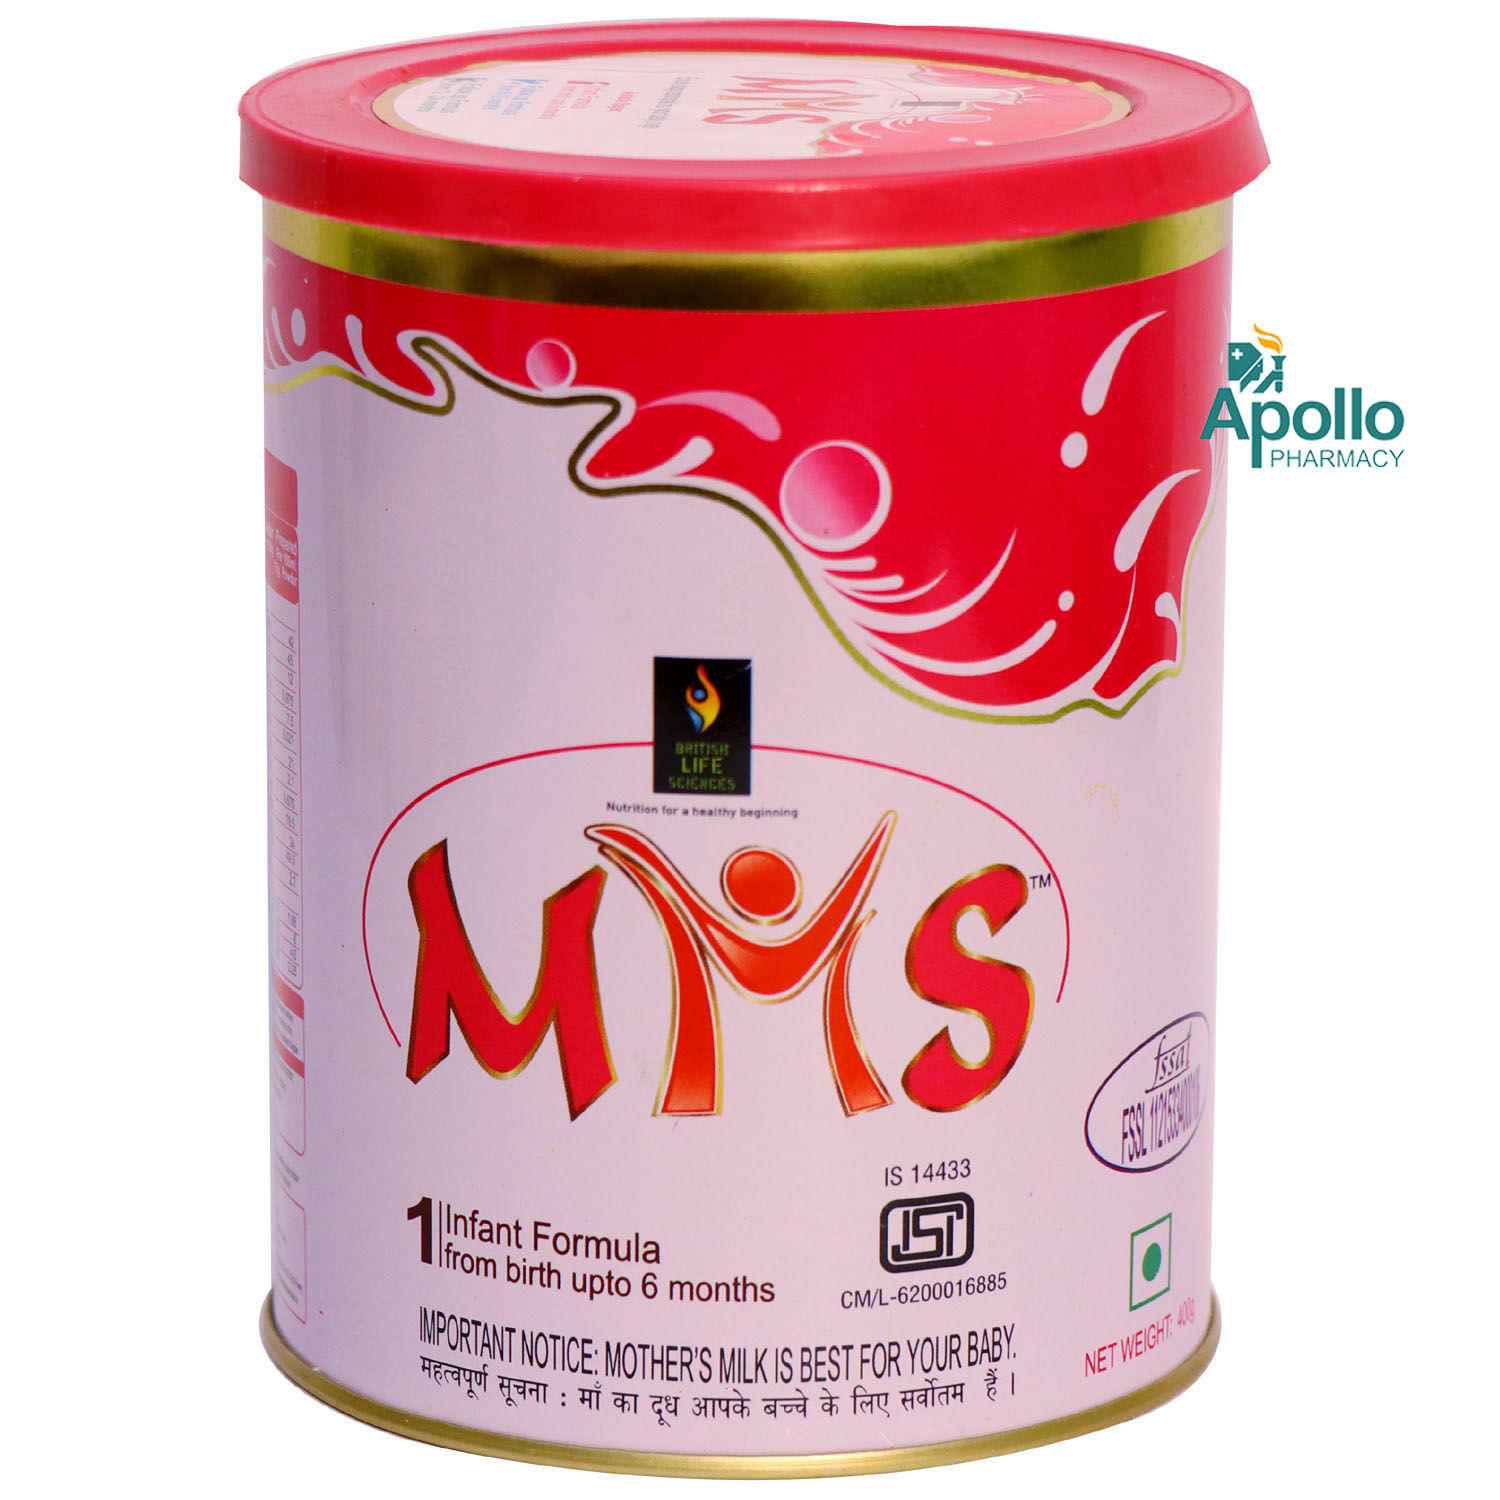 MMS 1 Infant Formula Powder, 400 gm, Pack of 1 